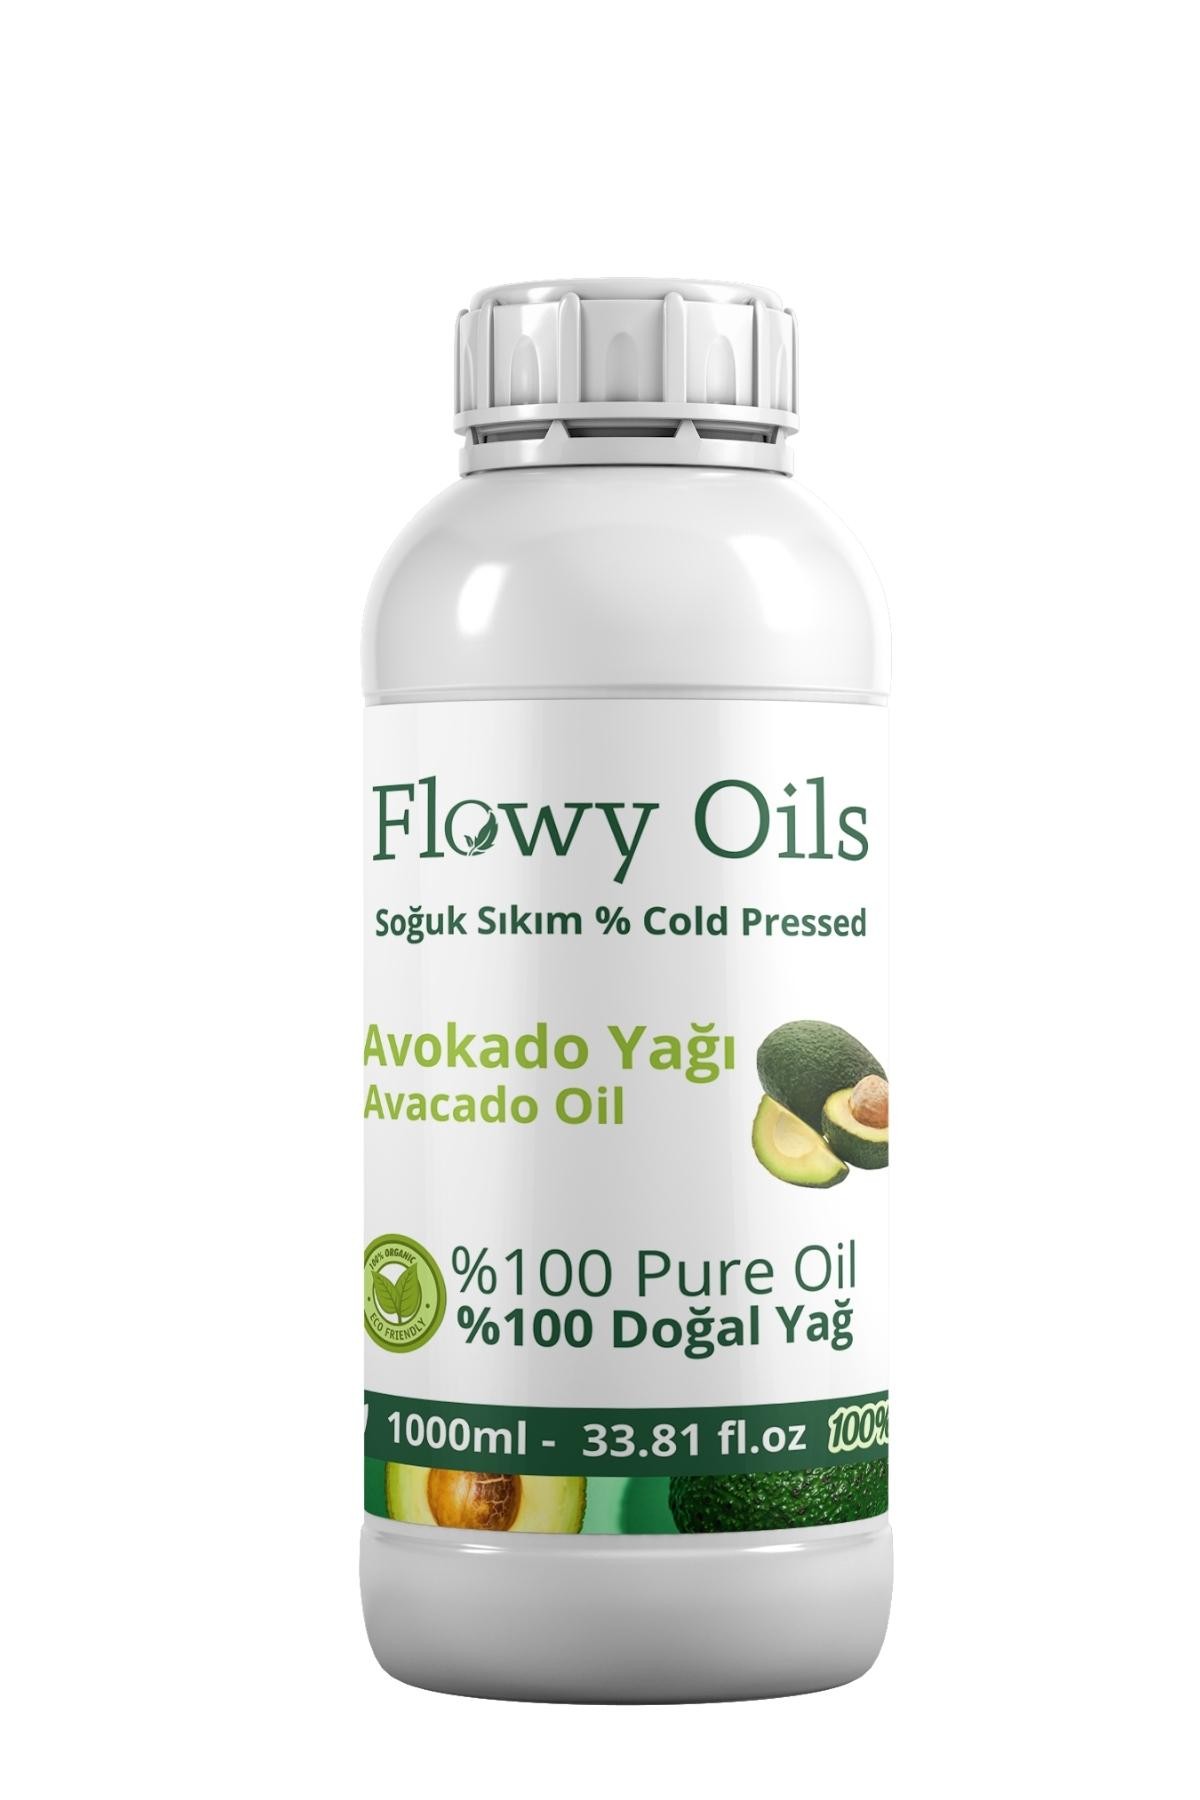 Avokado Yağı %100 Doğal Bitkisel Sabit Yağ Avacado Oil  1000ml 1 Litre